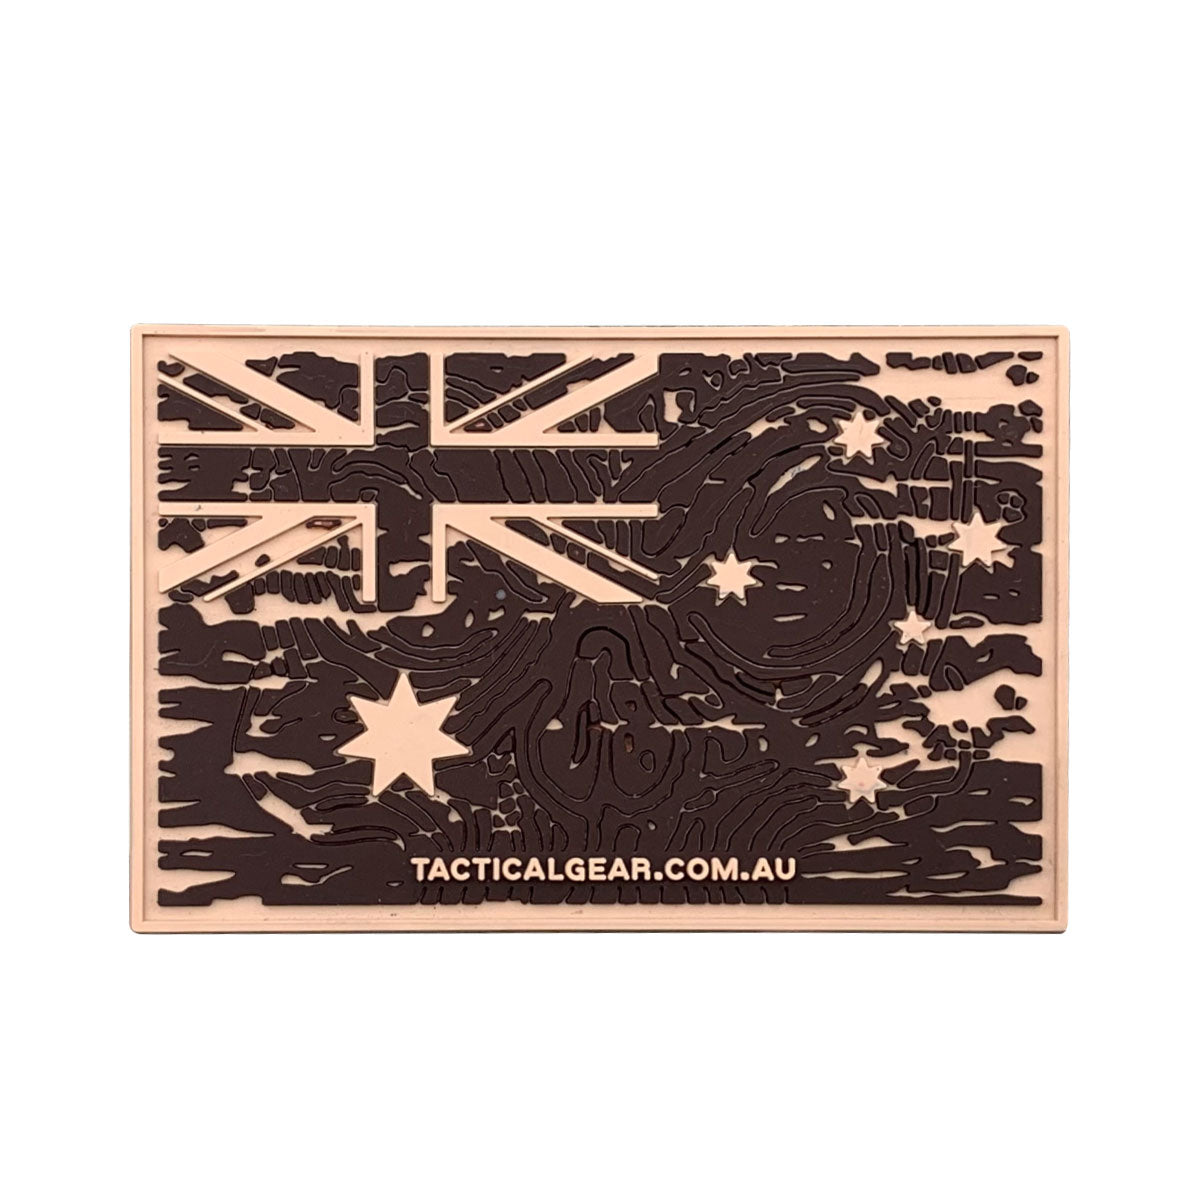 Tactical Gear Limited Edition Australian Flag Patch Patches & Tags Tactical Gear Australia Black/White Tactical Gear Supplier Tactical Distributors Australia